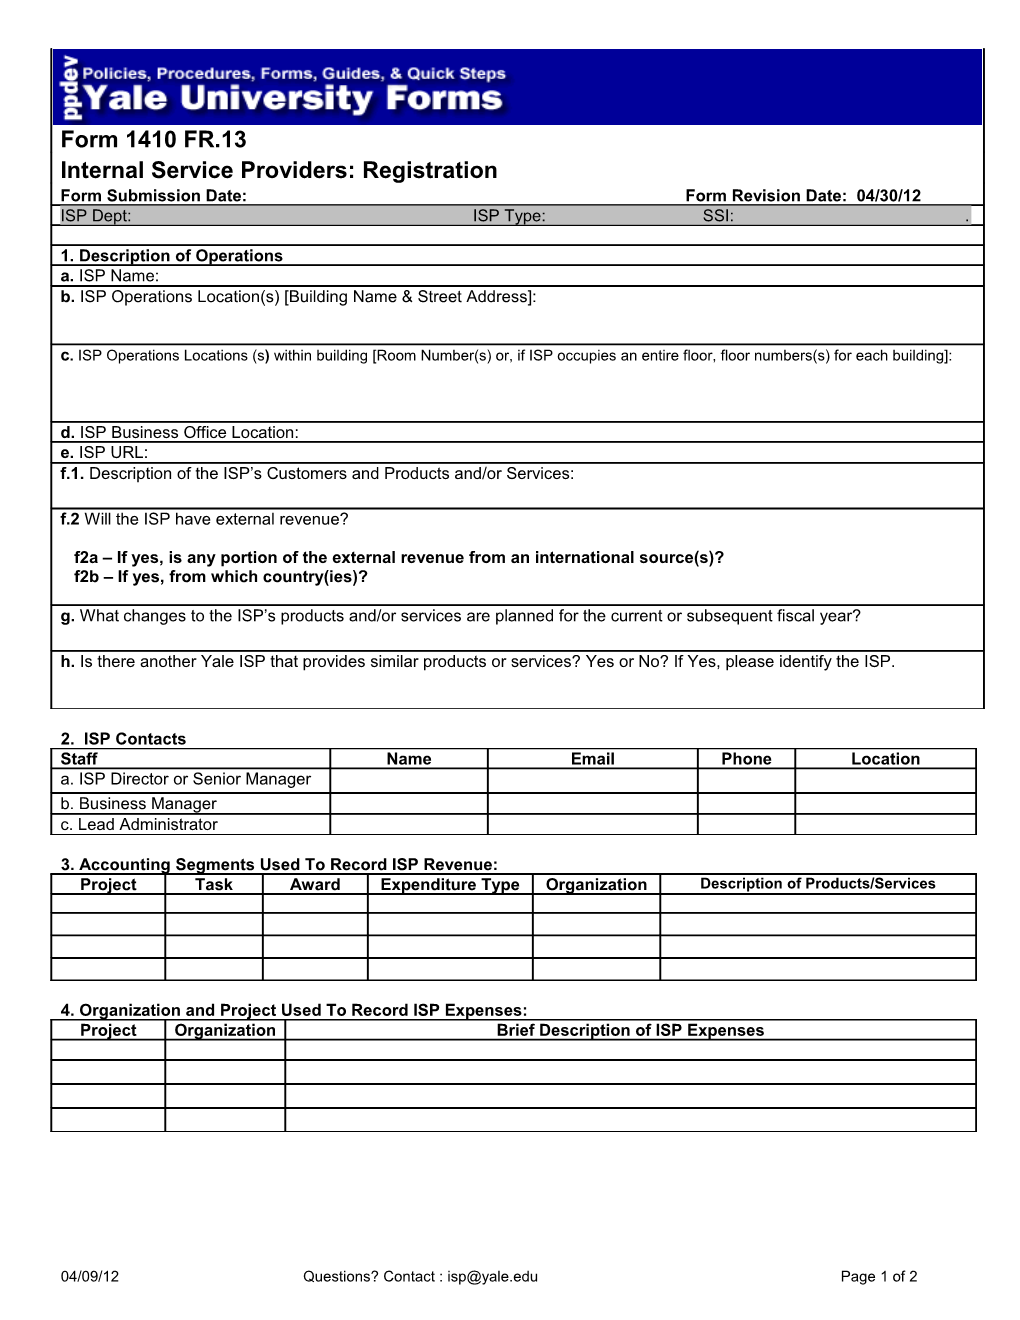 Form 1410 FR.13 Internal Service Provider Registration